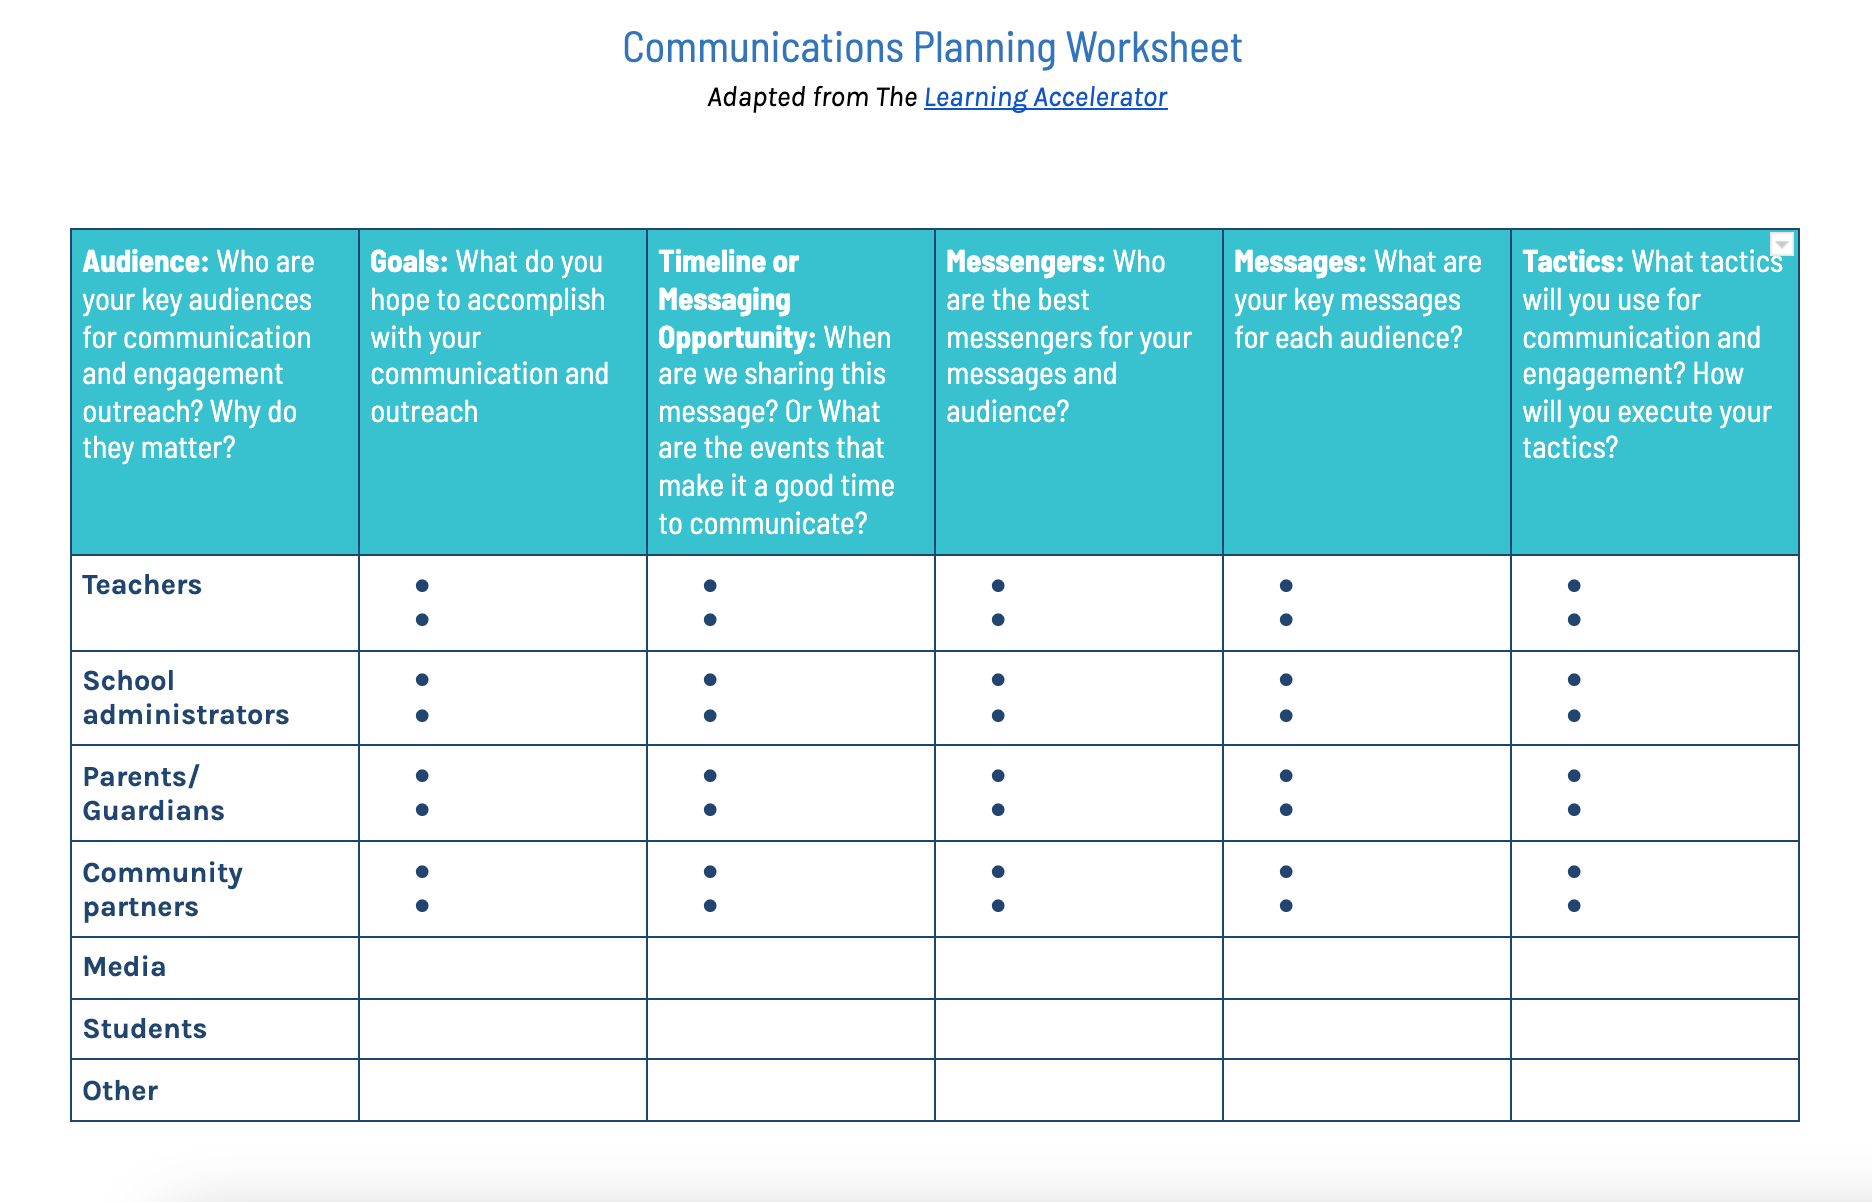 Communications planning worksheet